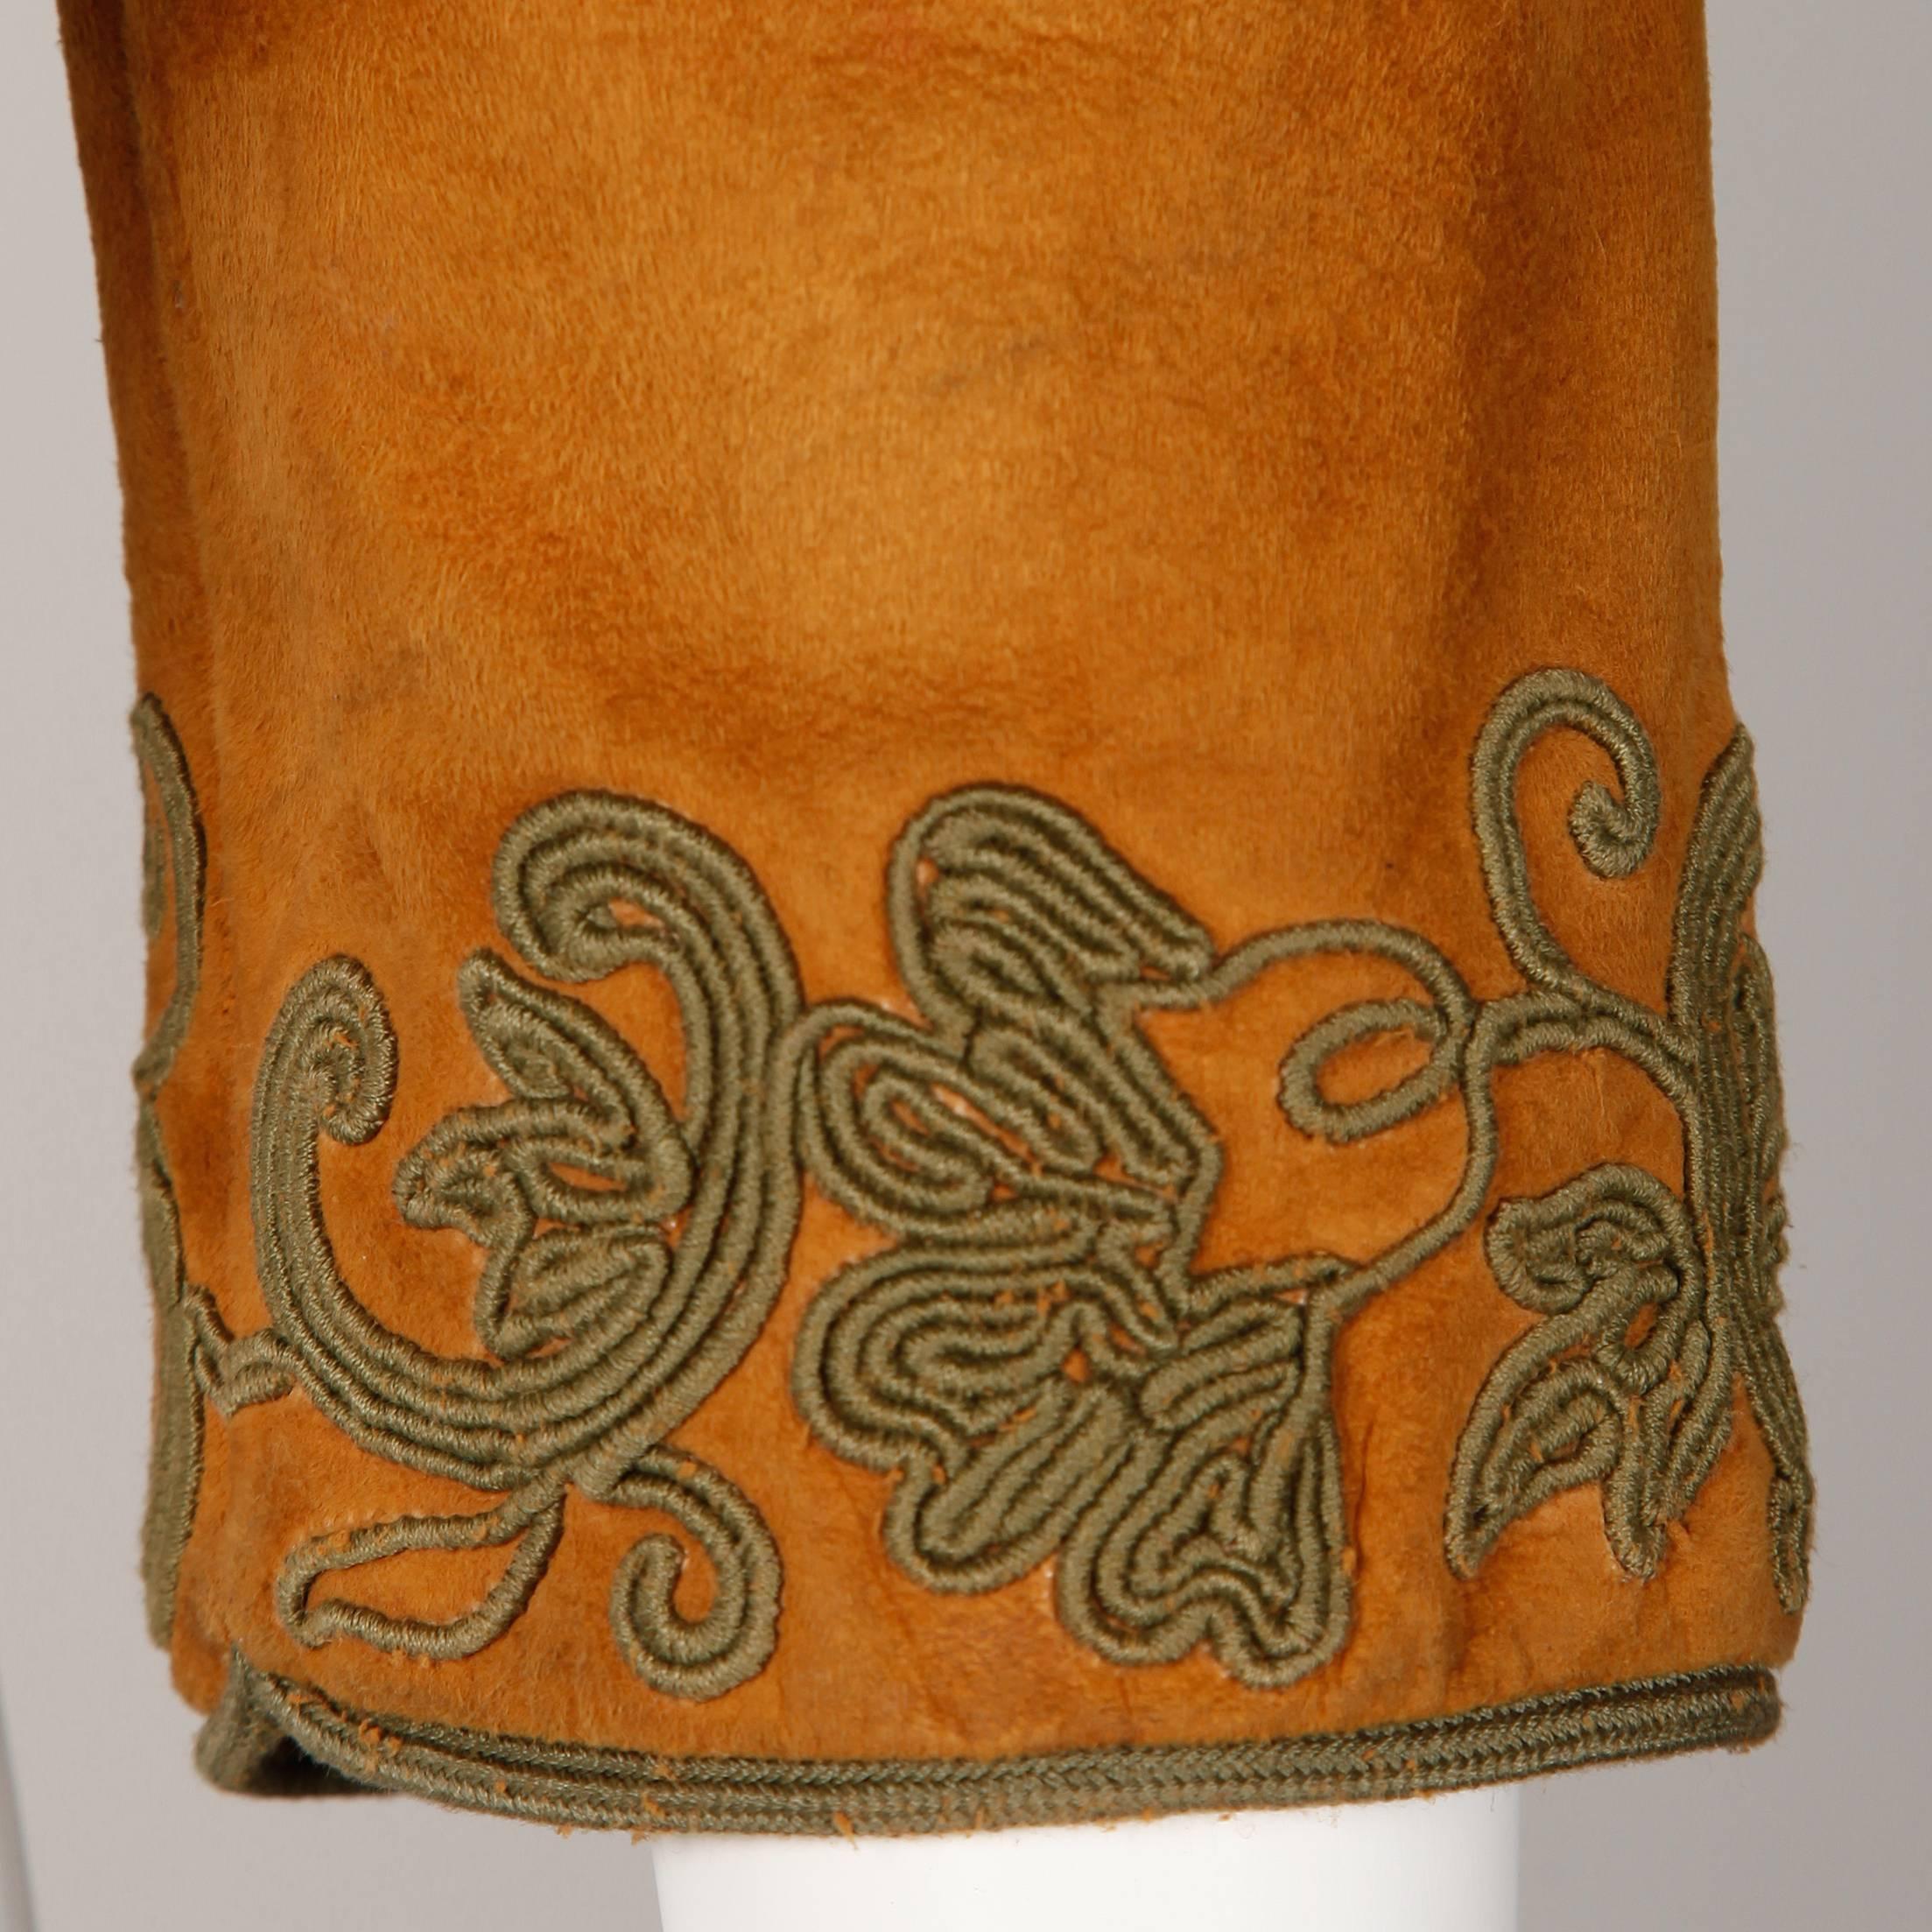 Women's Oscar de la Renta Vintage 1970s Suede Leather Jacket with Green Cord Embroidery